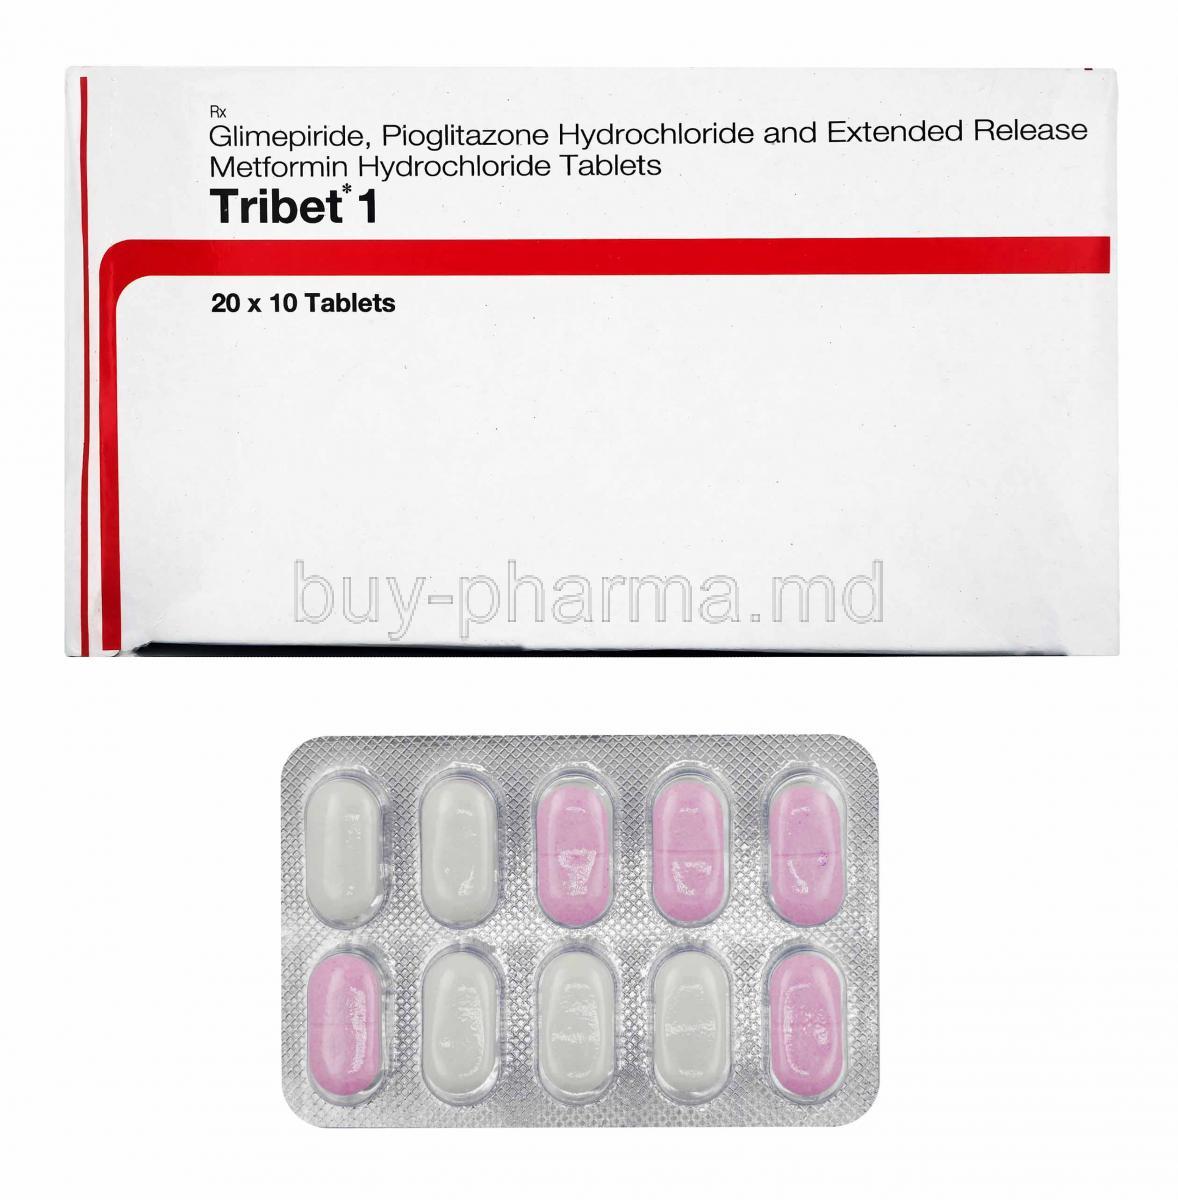 Tribet, Glimepiride, Metformin and Pioglitazone 1mg box and tablets